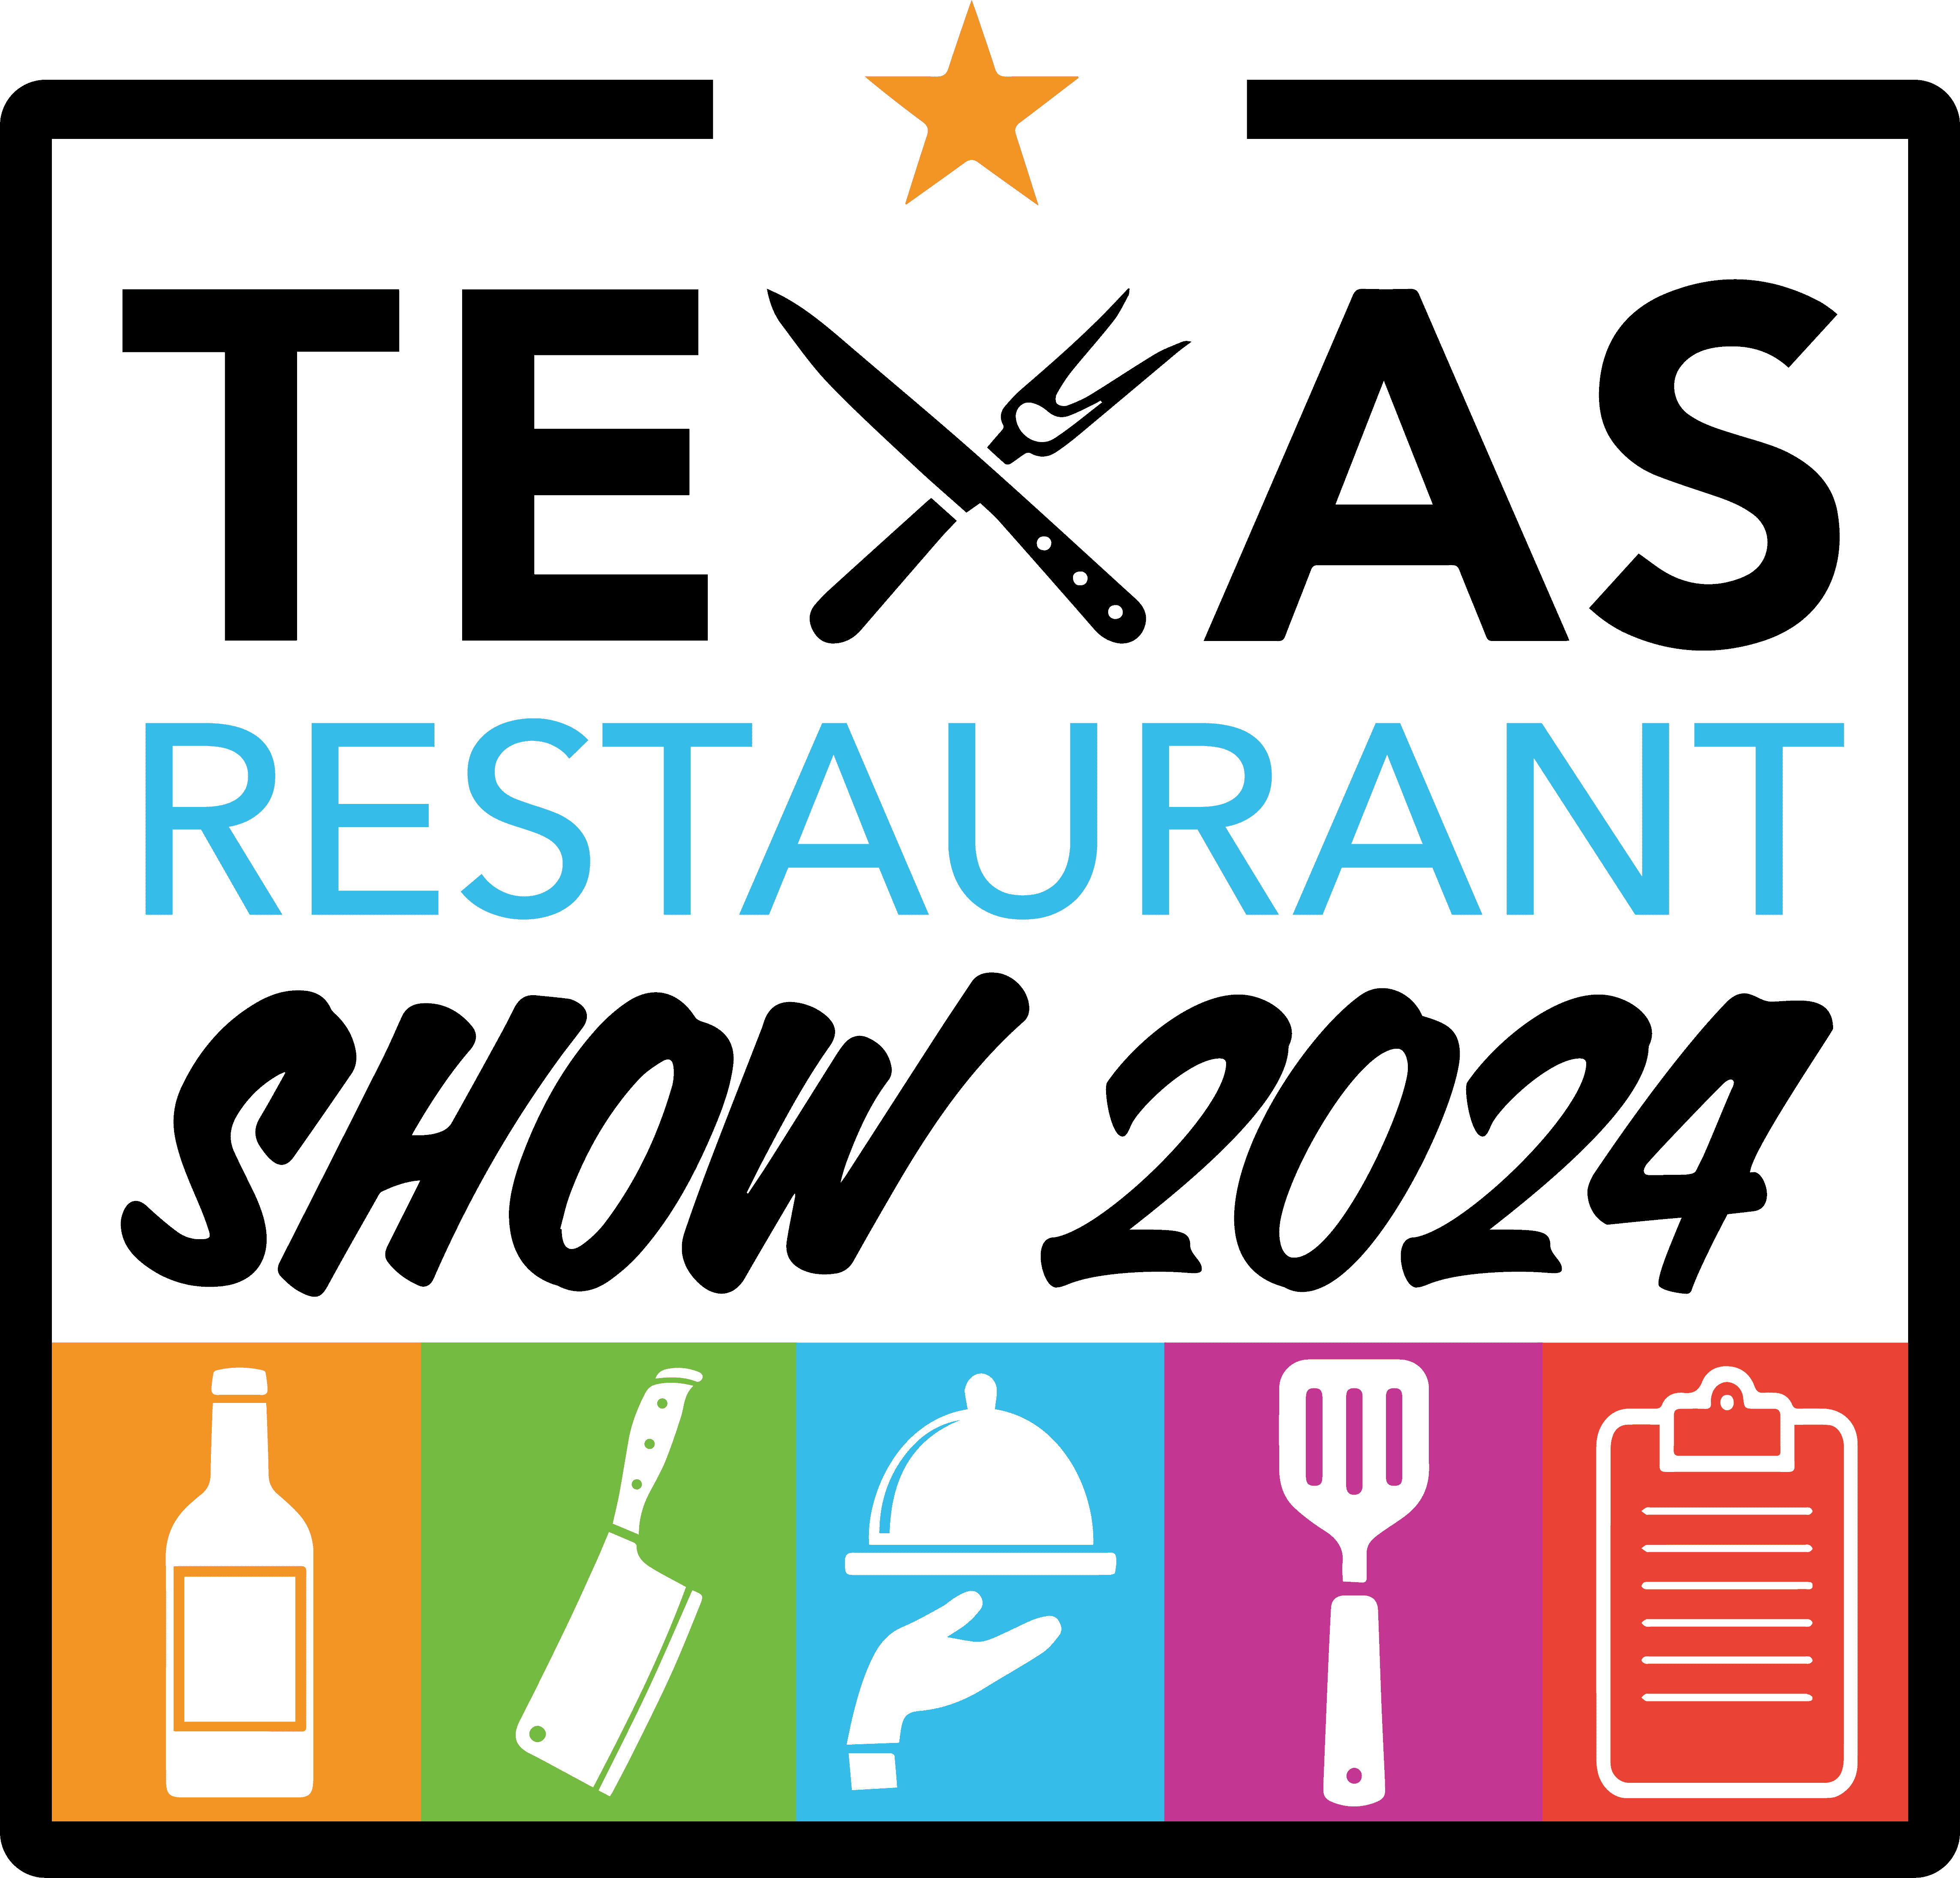 2. The Texas Restaurant Show